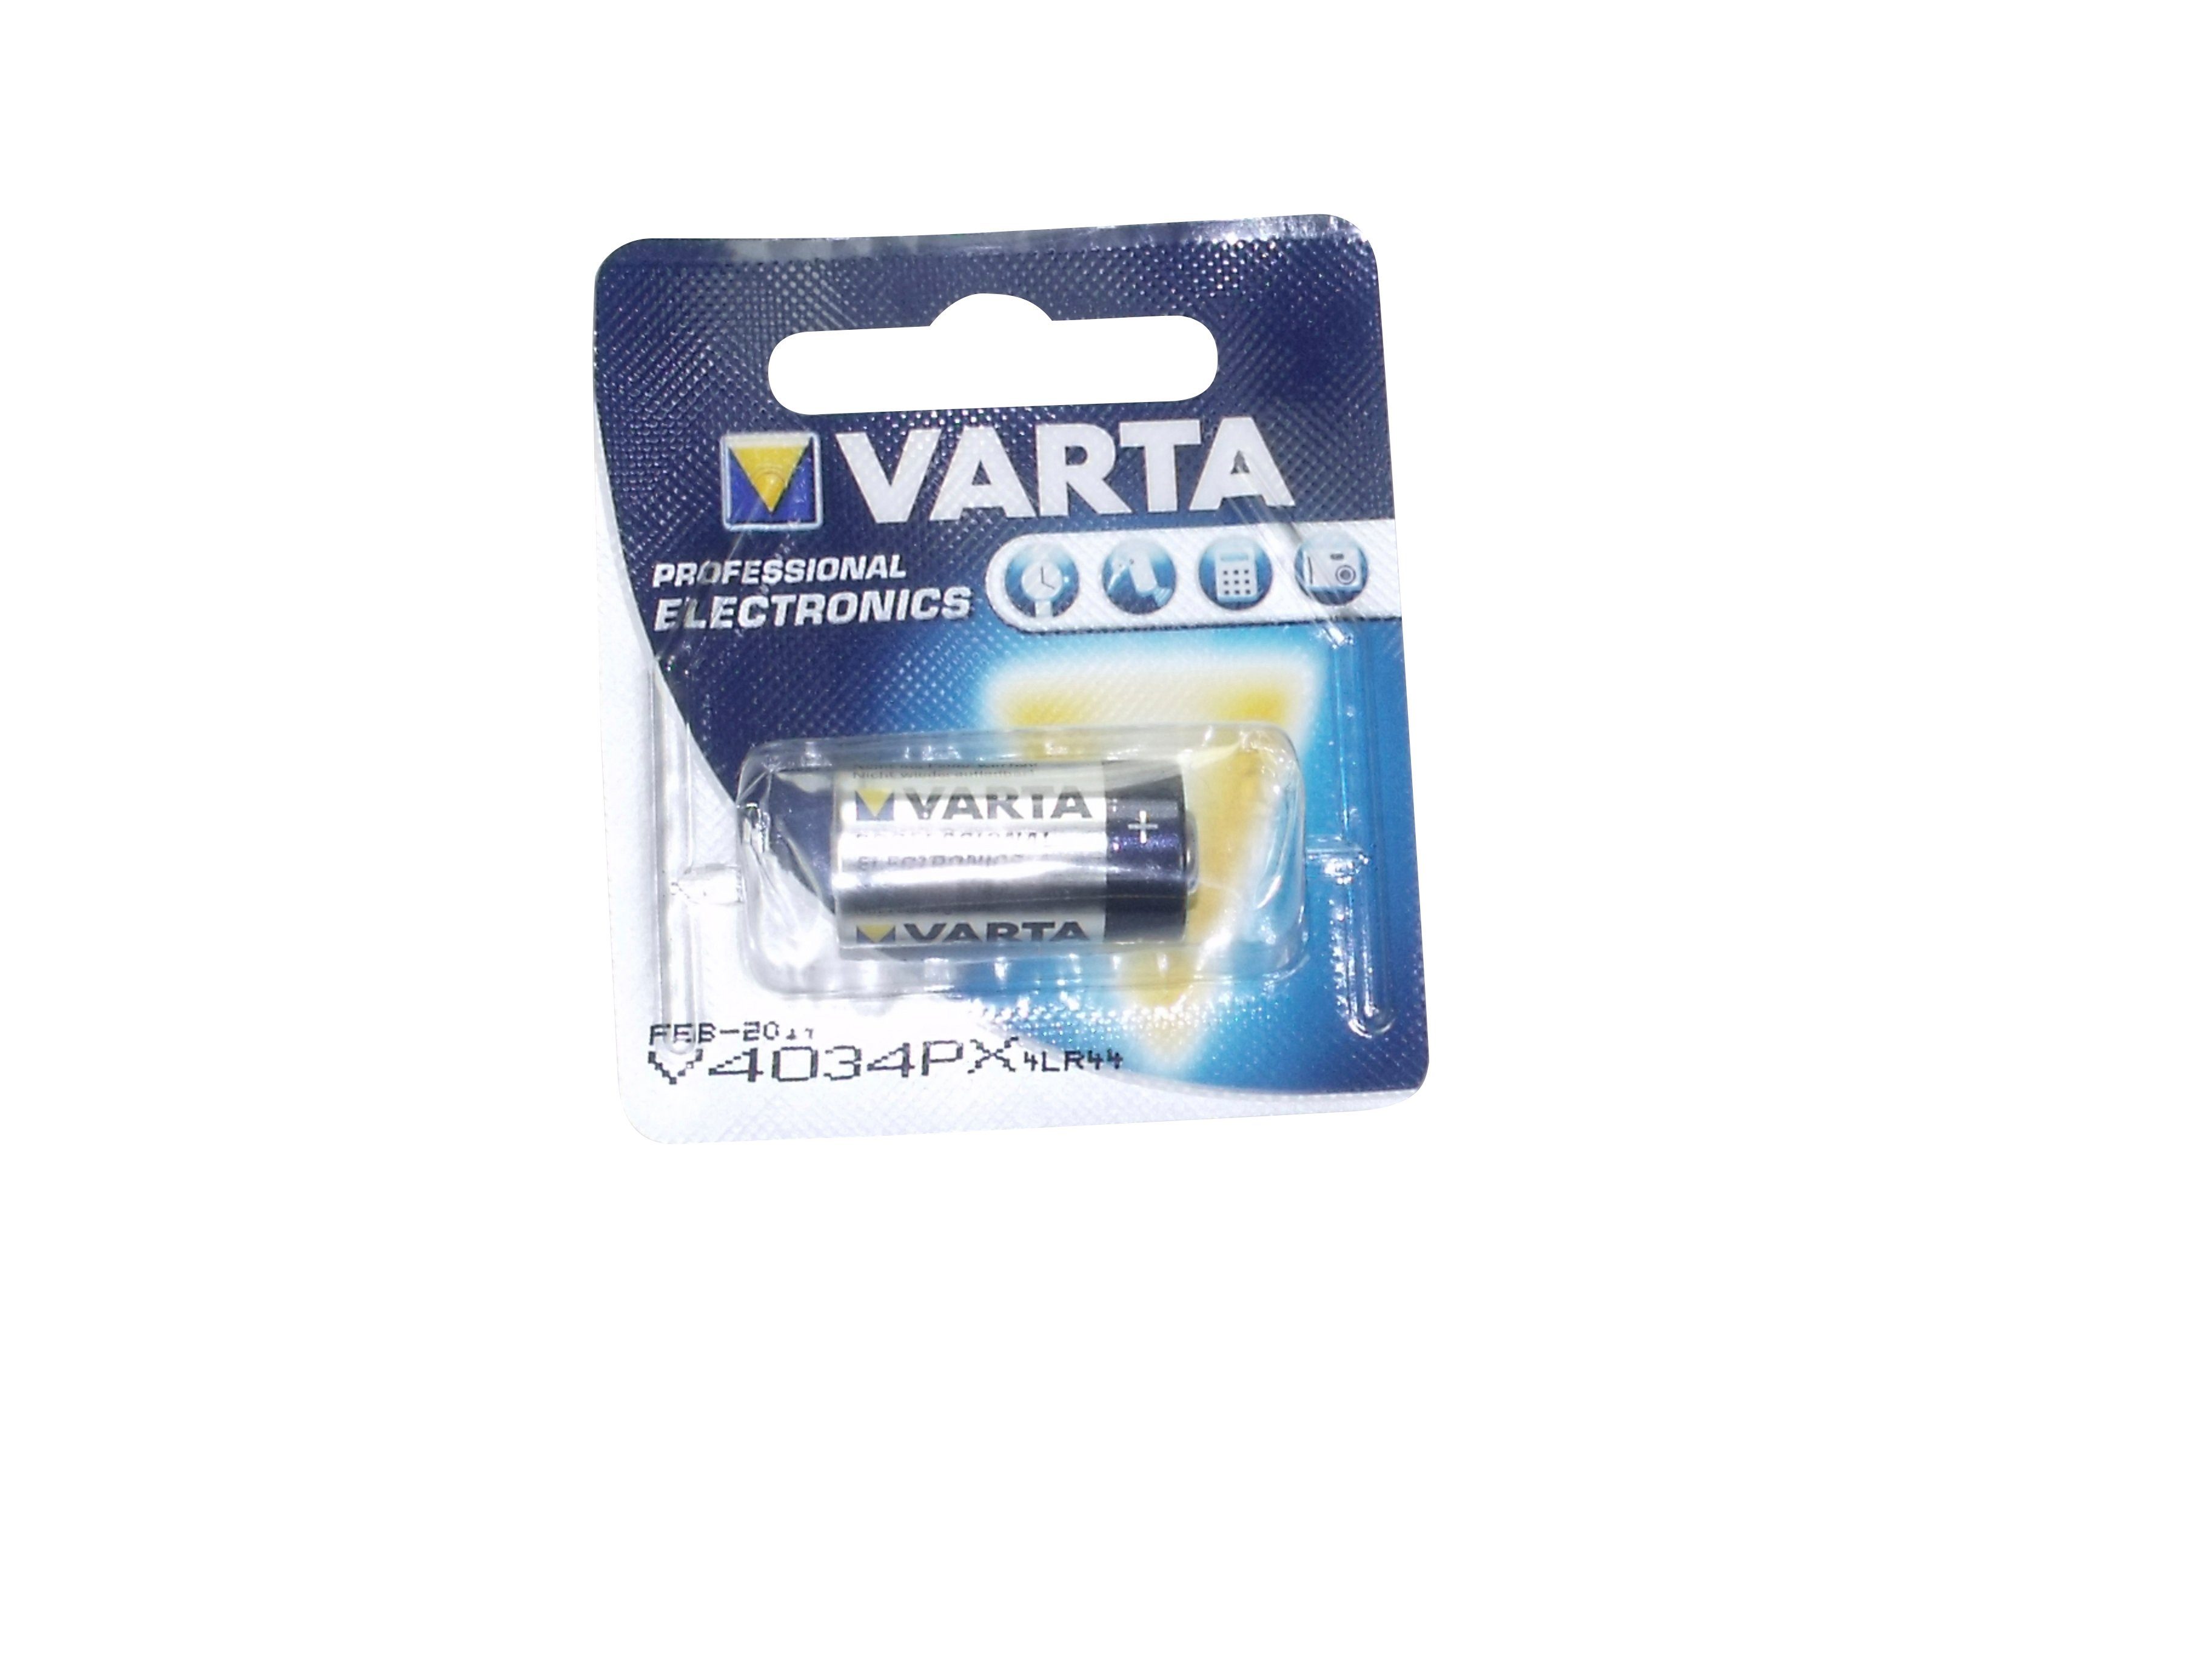 VARTA Alkaline Batterie passend für Reflolux Blutzuckertestgerät S Akku 105 mAh (6,0 V)